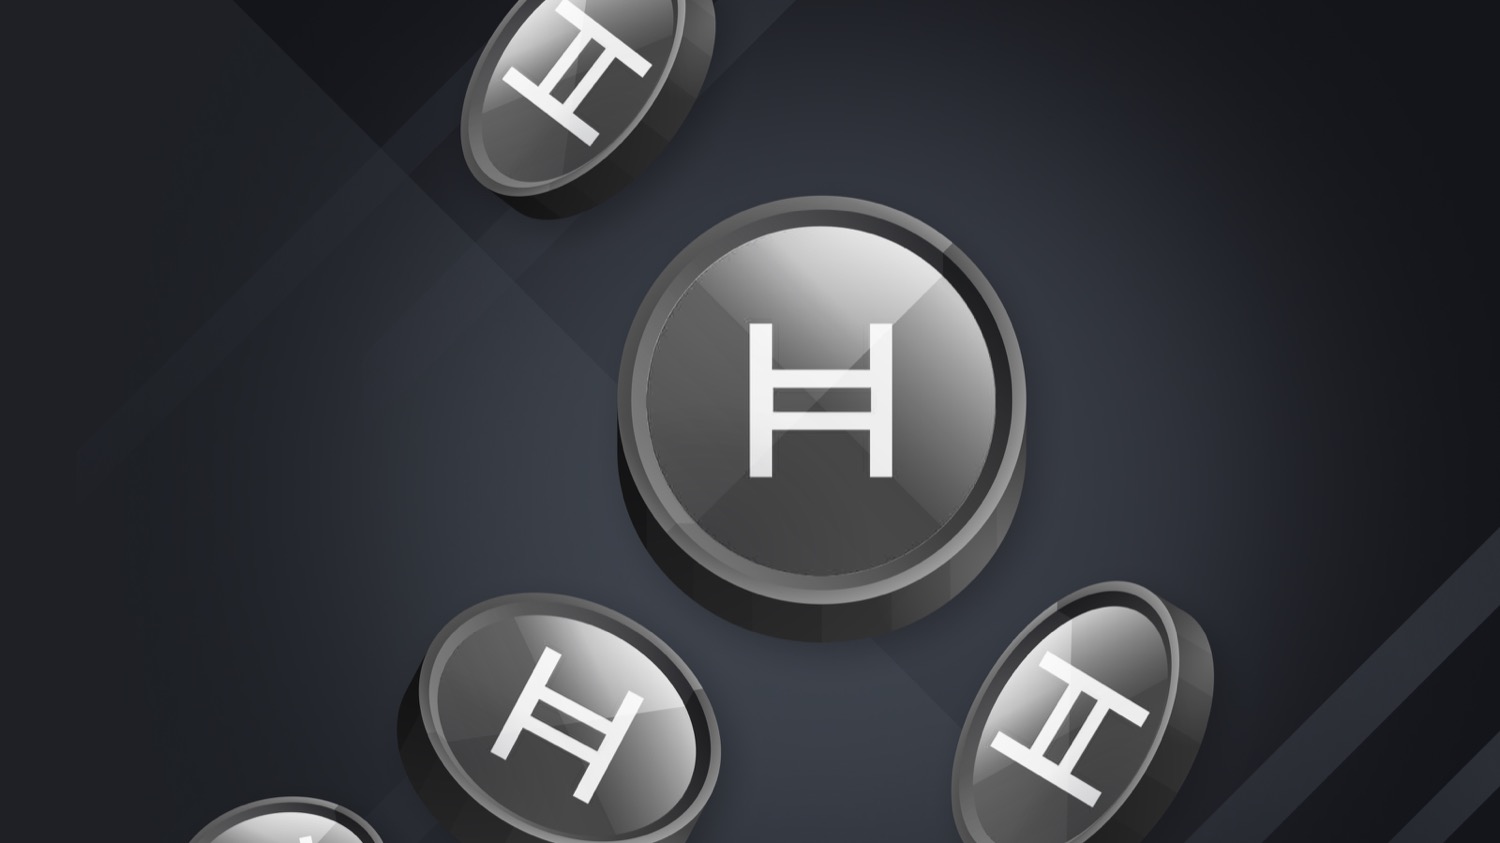 All About Hedera Hashgraph (HBAR)